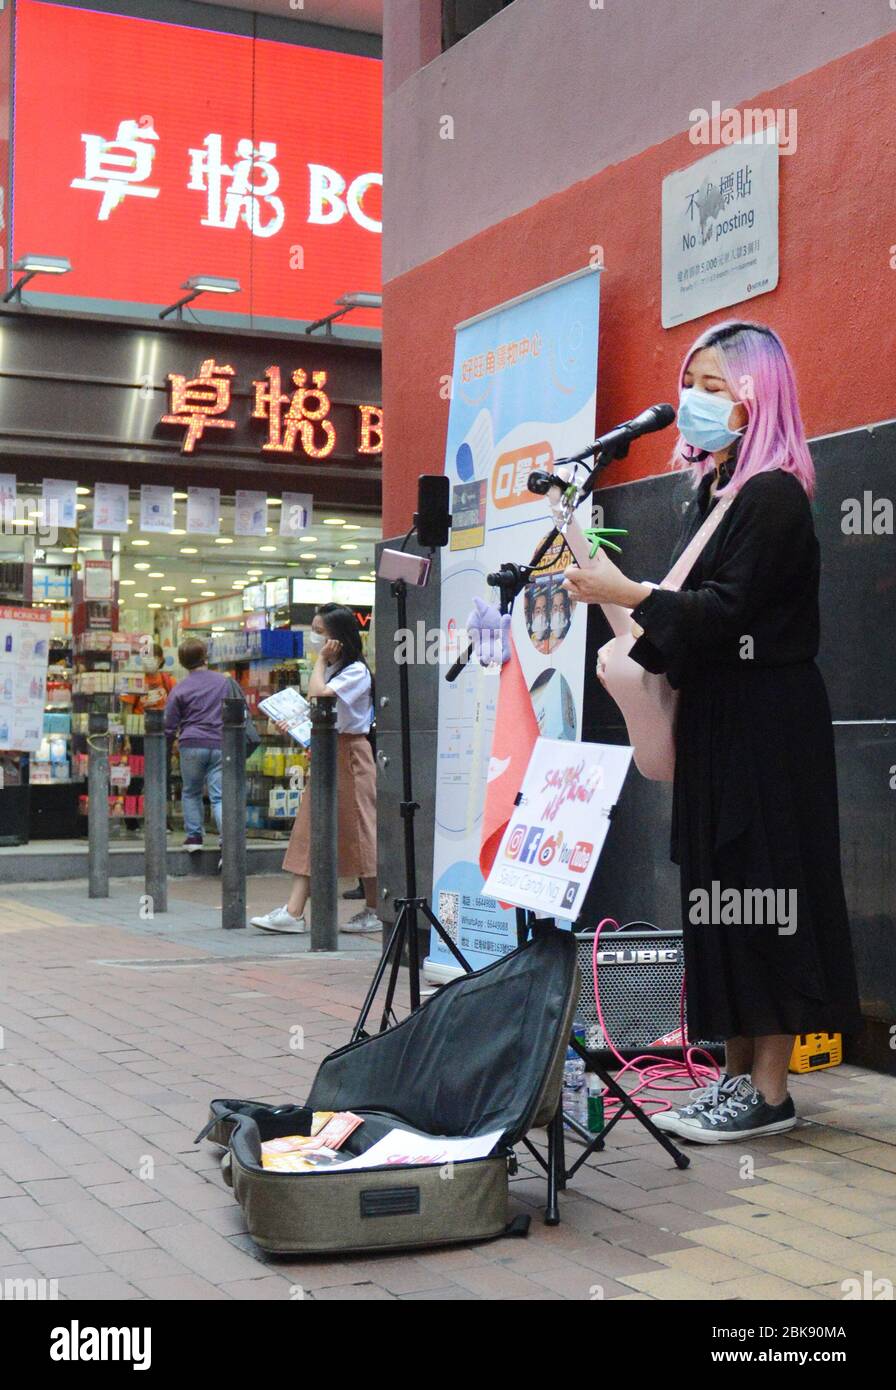 Le marin Candy NG se produit dans les rues de Mongkok, Hong Kong. Banque D'Images